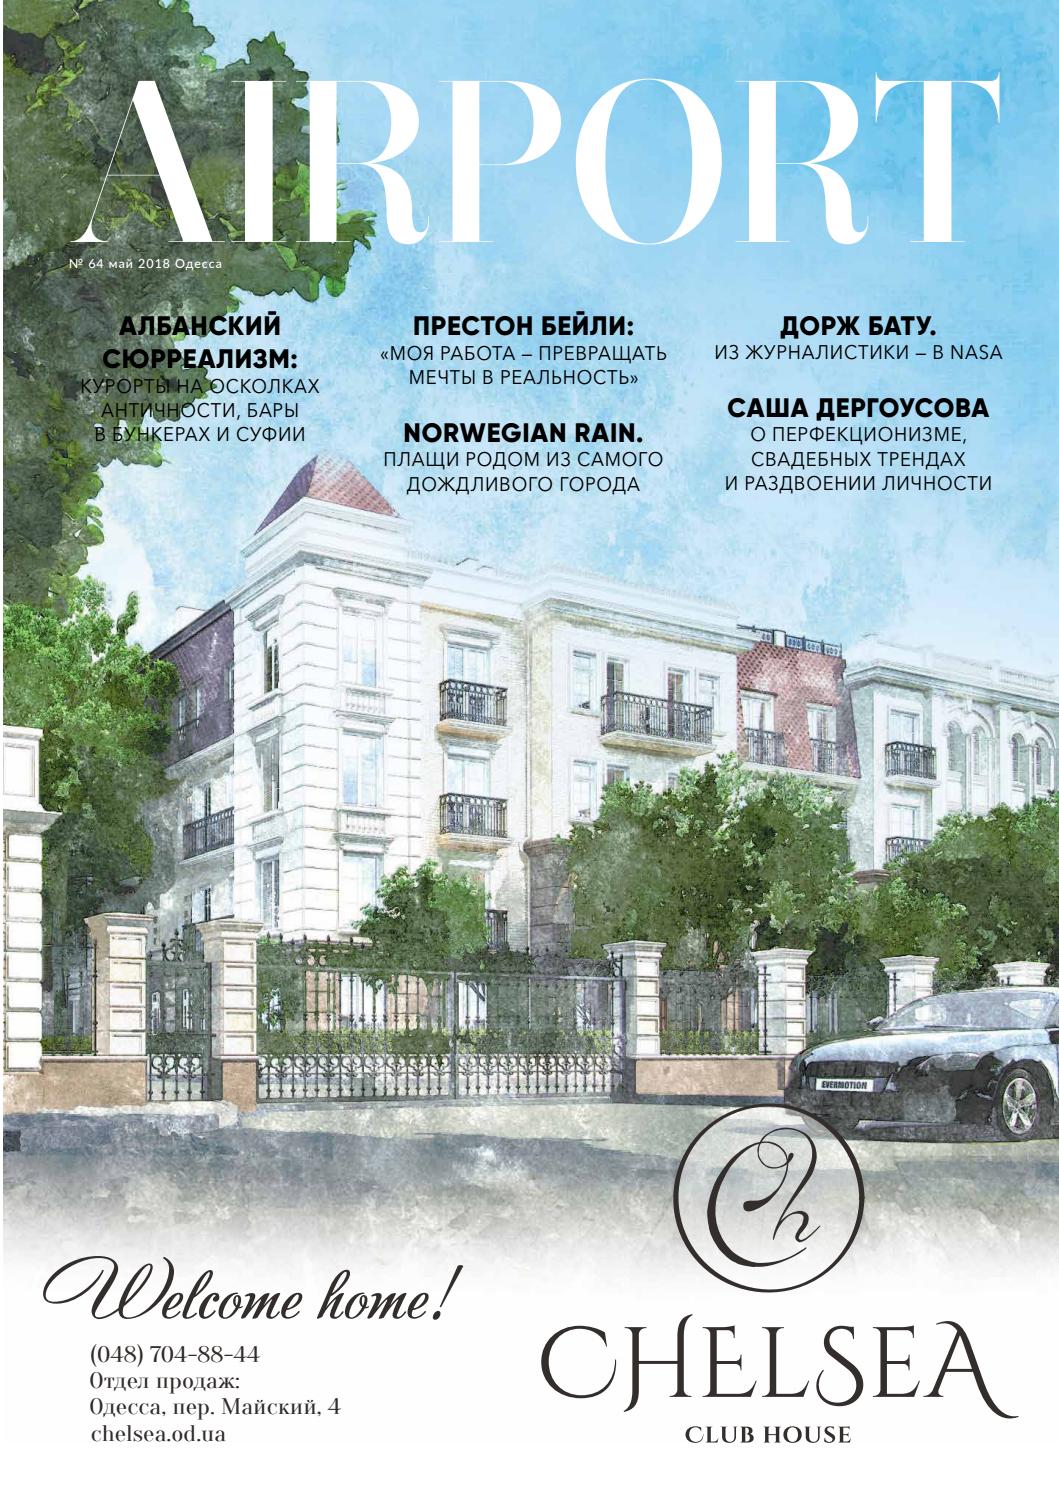 Salon De Jardin En Promo Charmant May 18 by Airport Magazine Odessa issuu